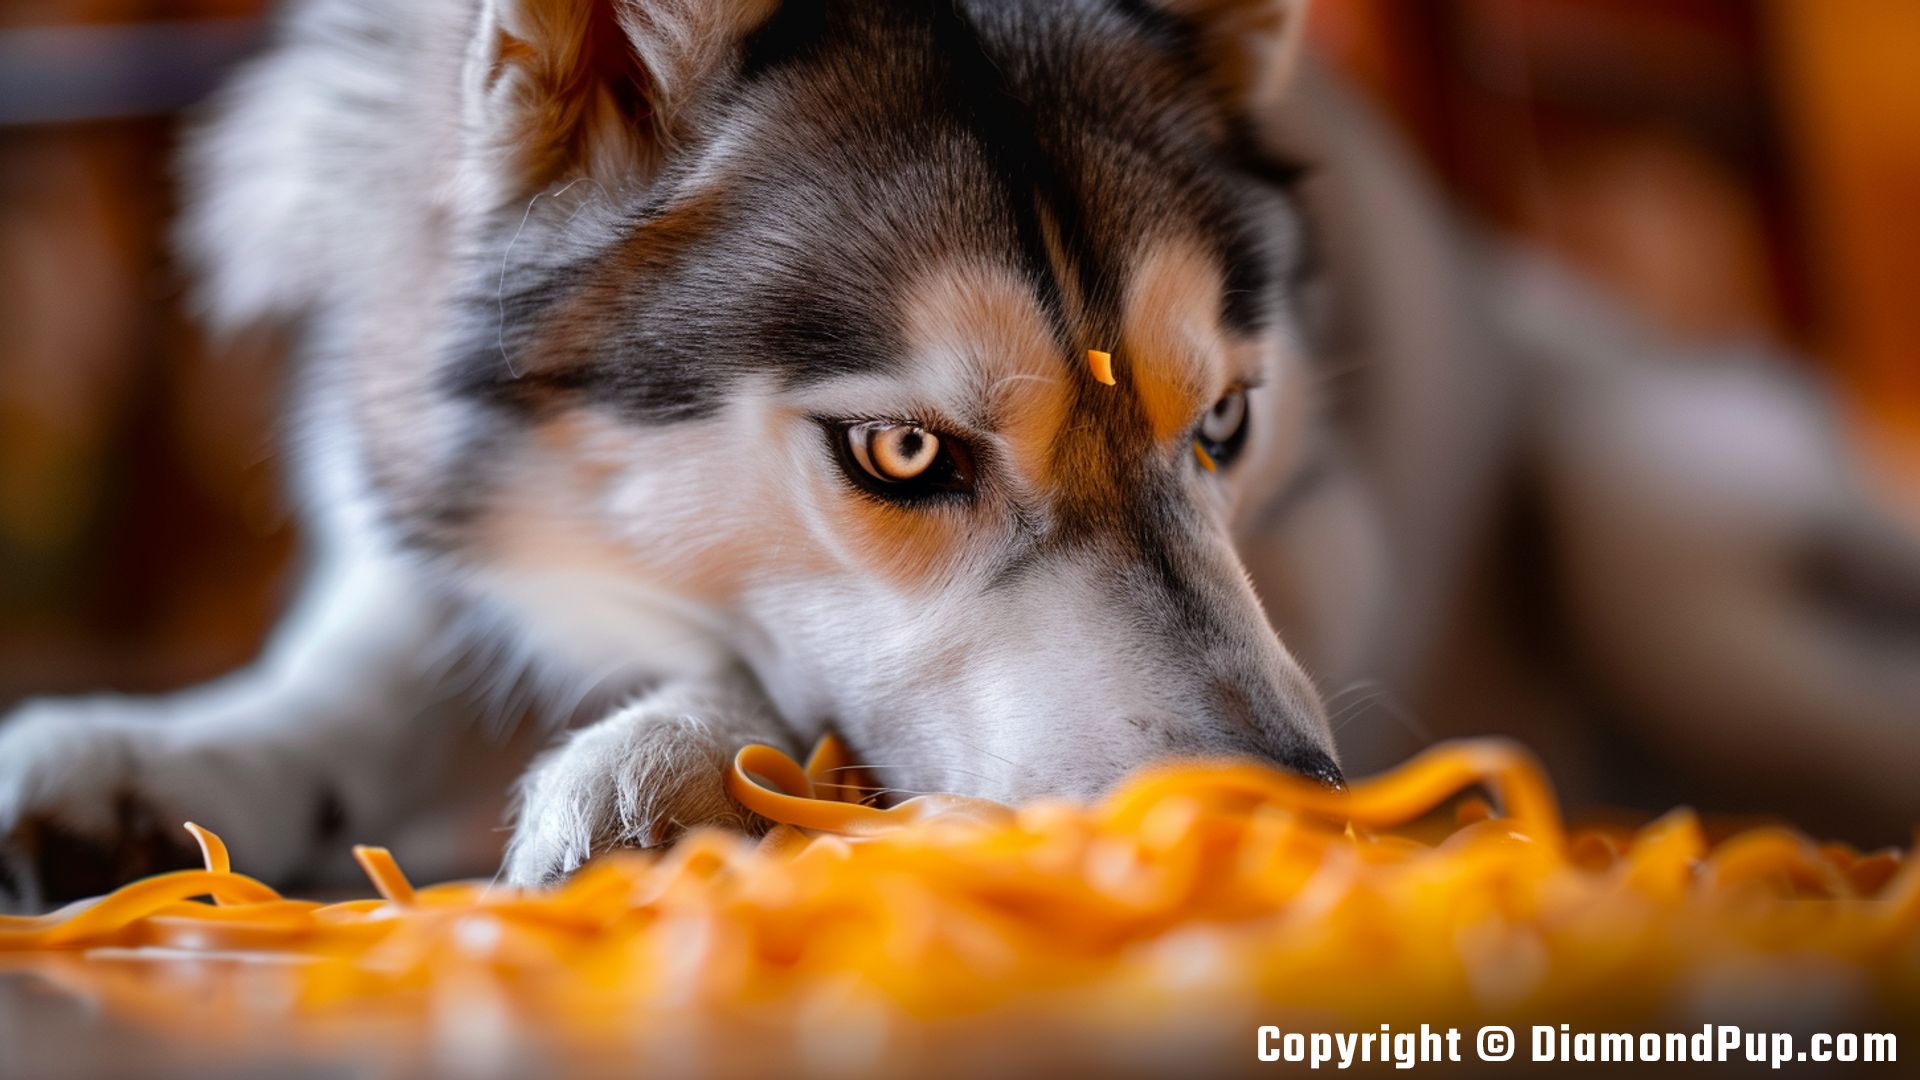 Photo of an Adorable Husky Eating Pasta